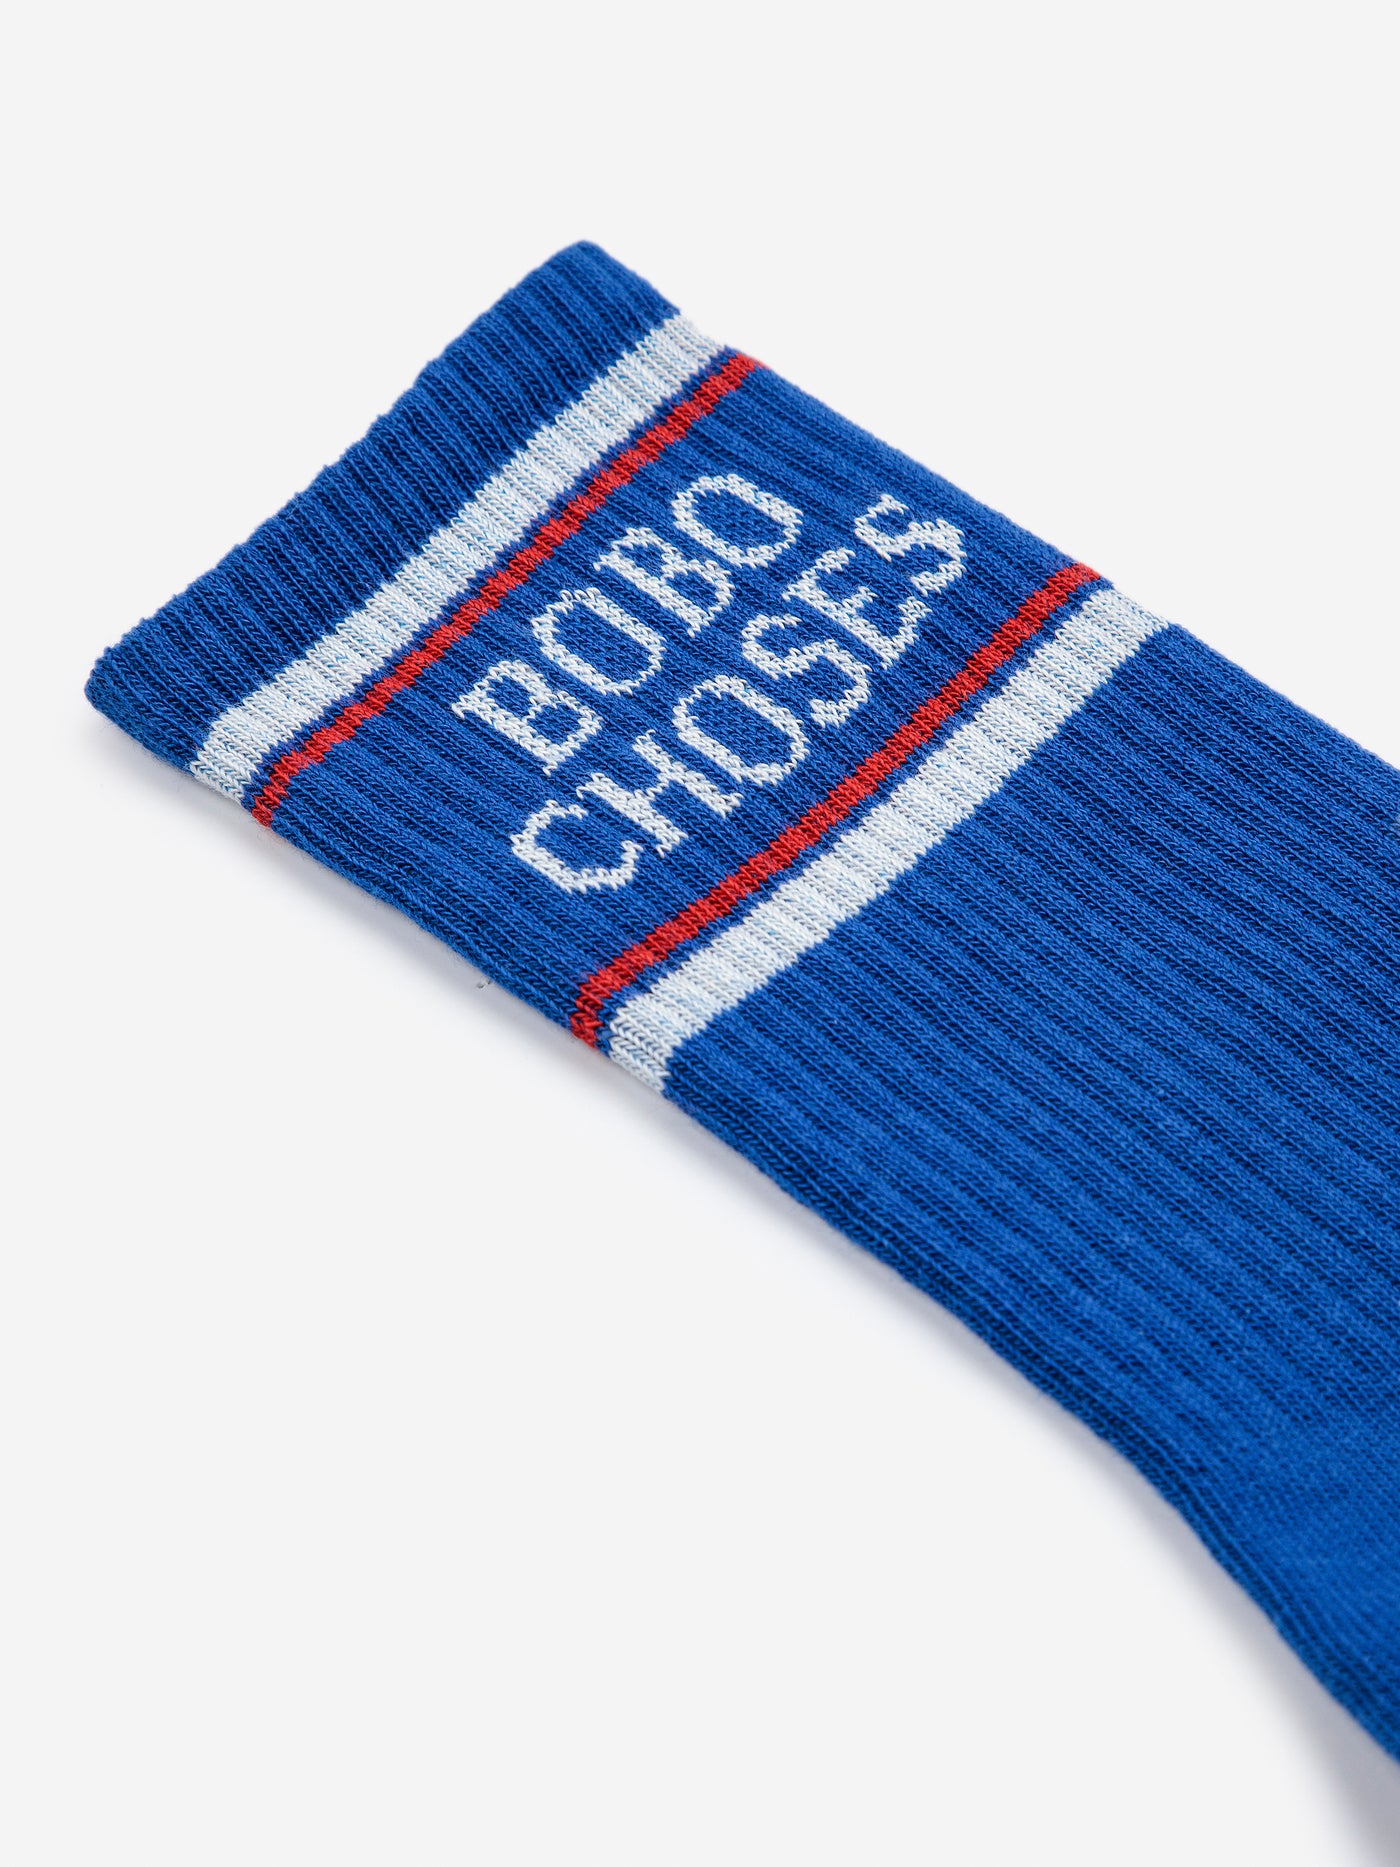 Bobo Choses - Socken mit Bobo-Logo 'Bobo Choses short socks'